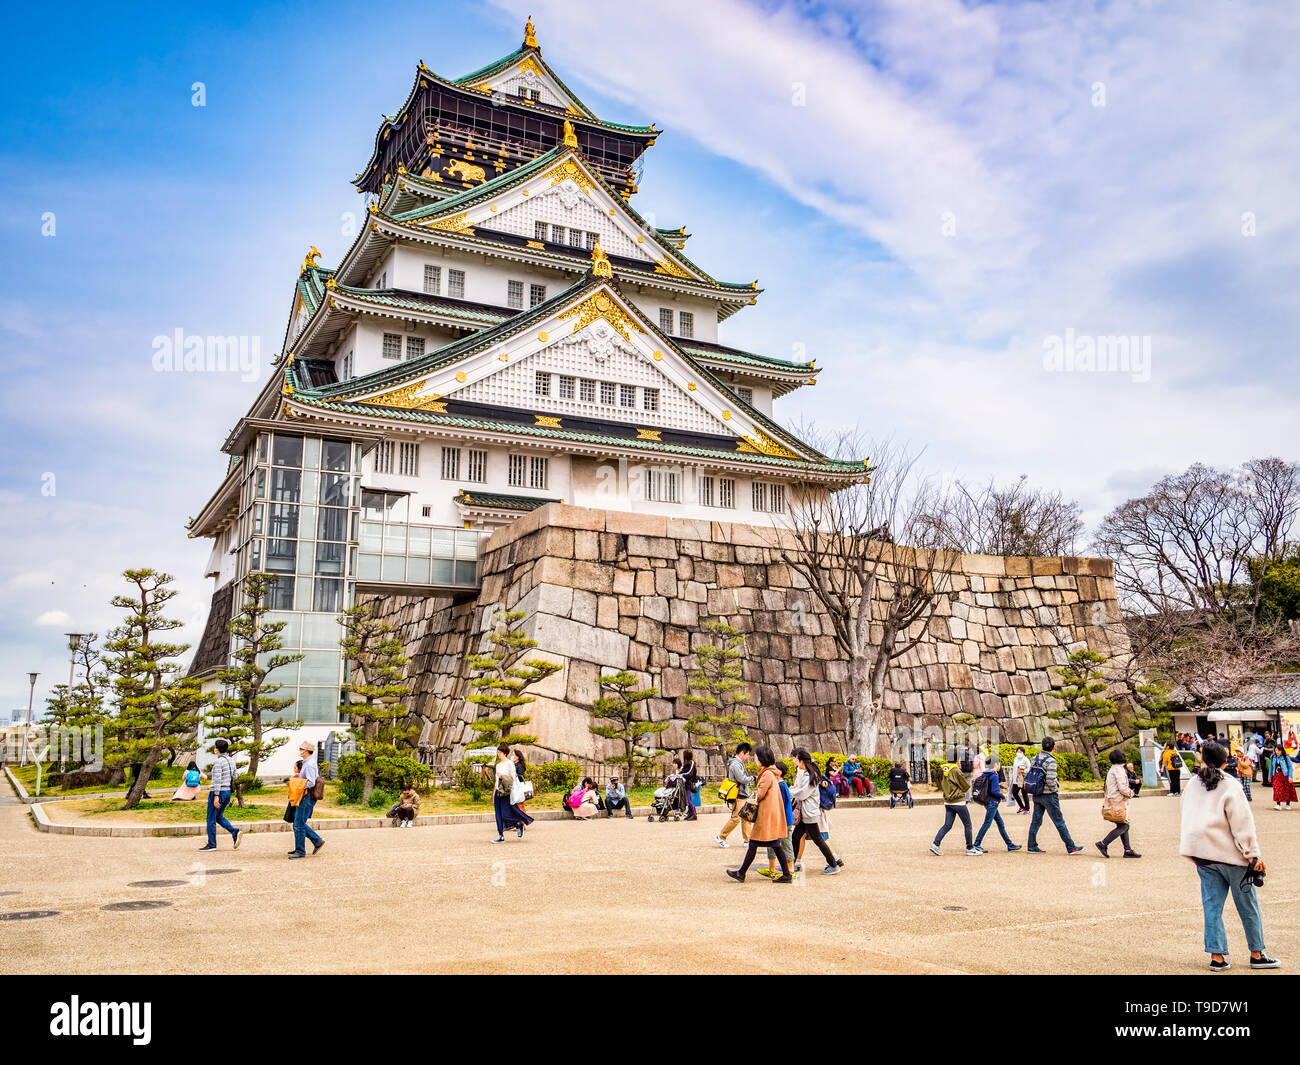 28 mars 2019 : Osaka, Japon - Le principal donjon de Château d'Osaka, Osaka, Japon Banque D'Images